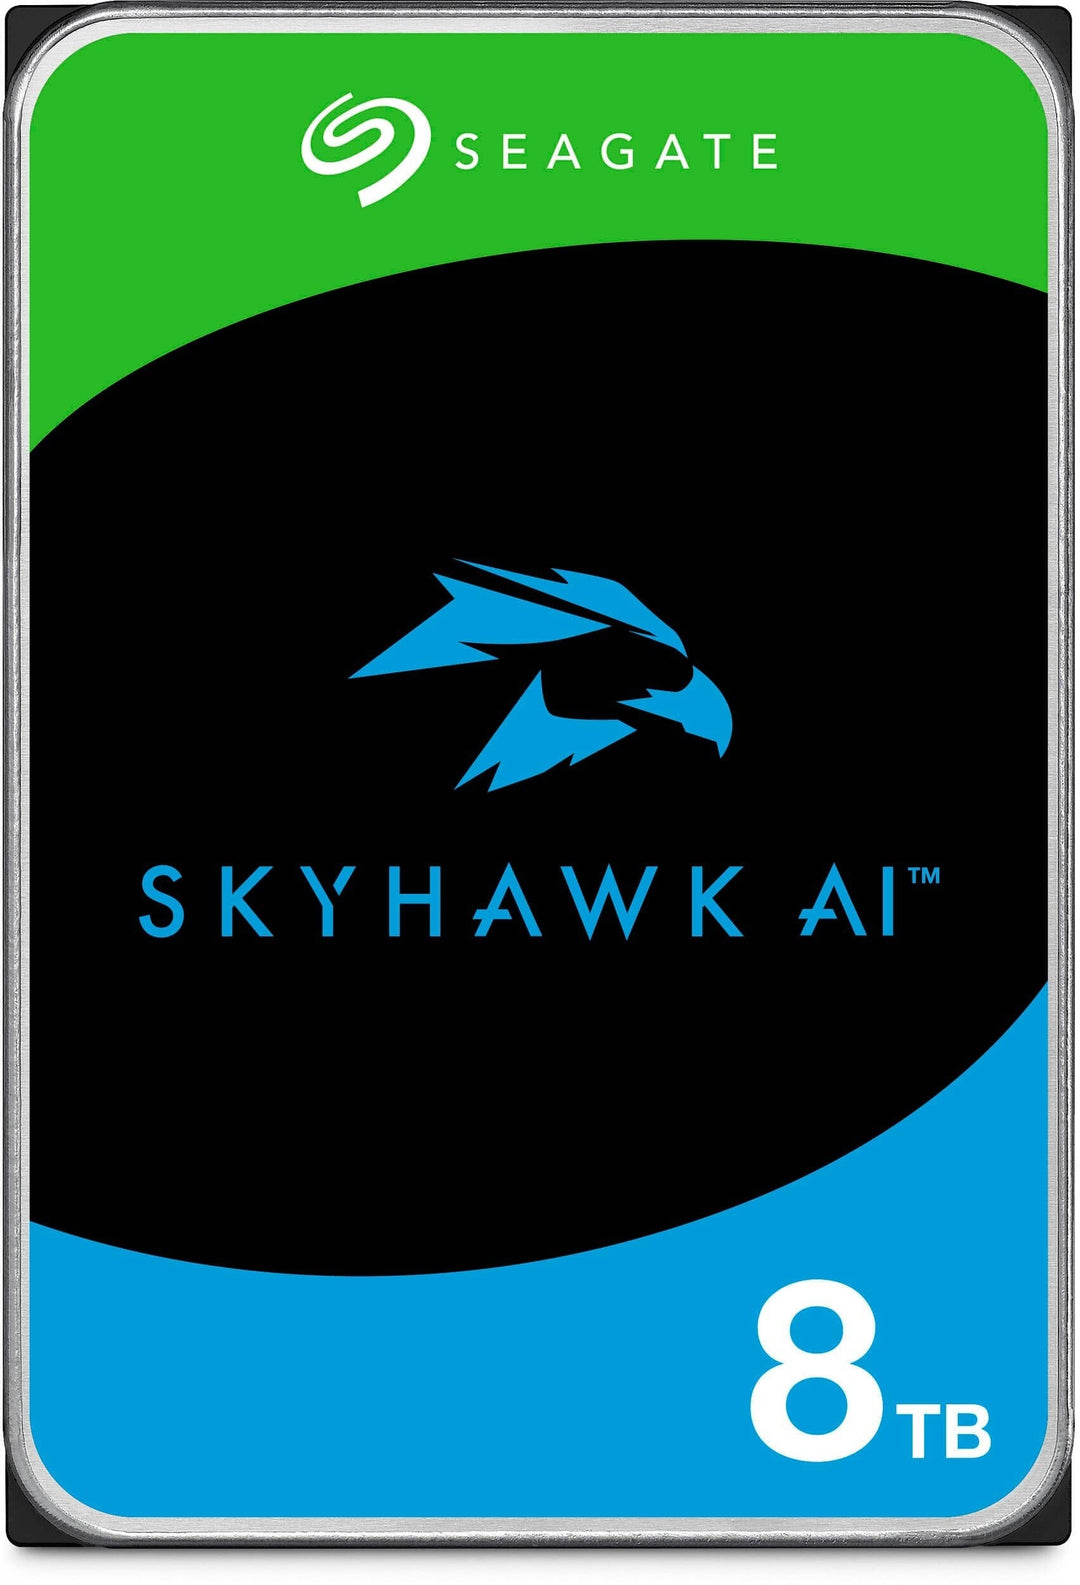 Seagate Skyhawk AI 8TB 7200RPM SATA 6Gb/s 256MB Cache 3.5" Internal Hard Drive (ST8000VE001)